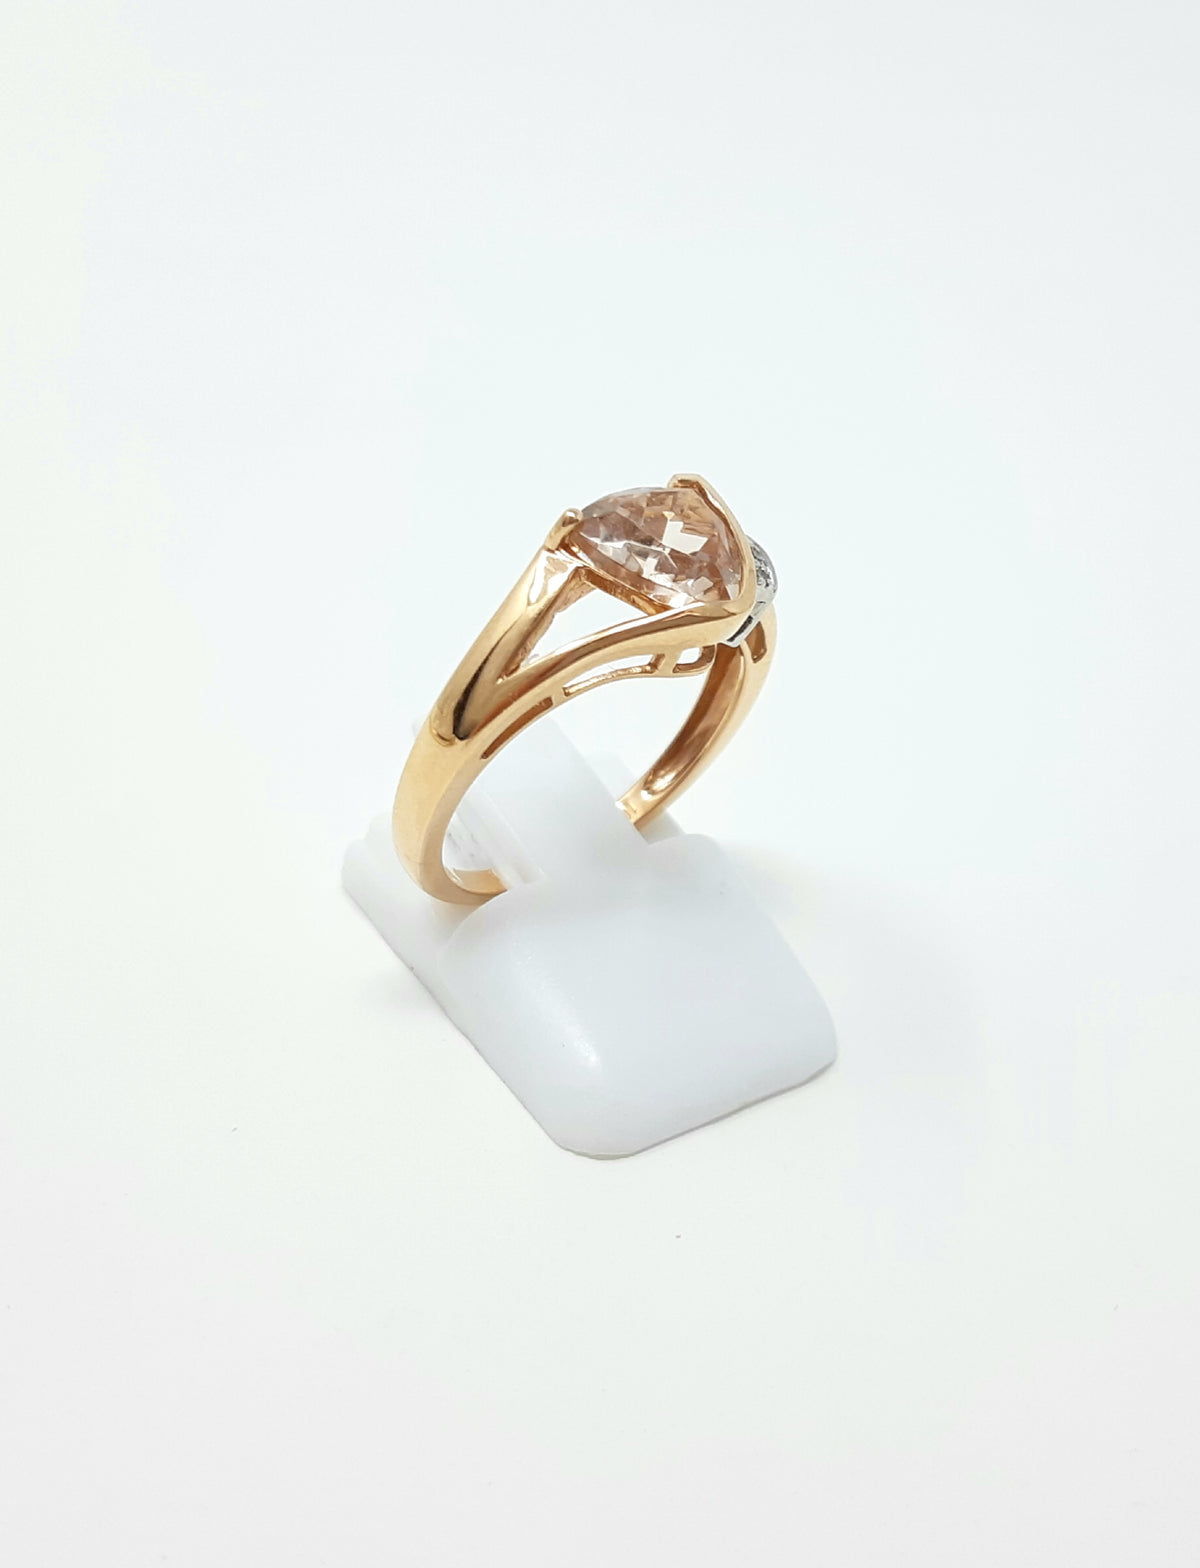 10K Rose Gold Gemstone and Diamond Ring- Size 6.5